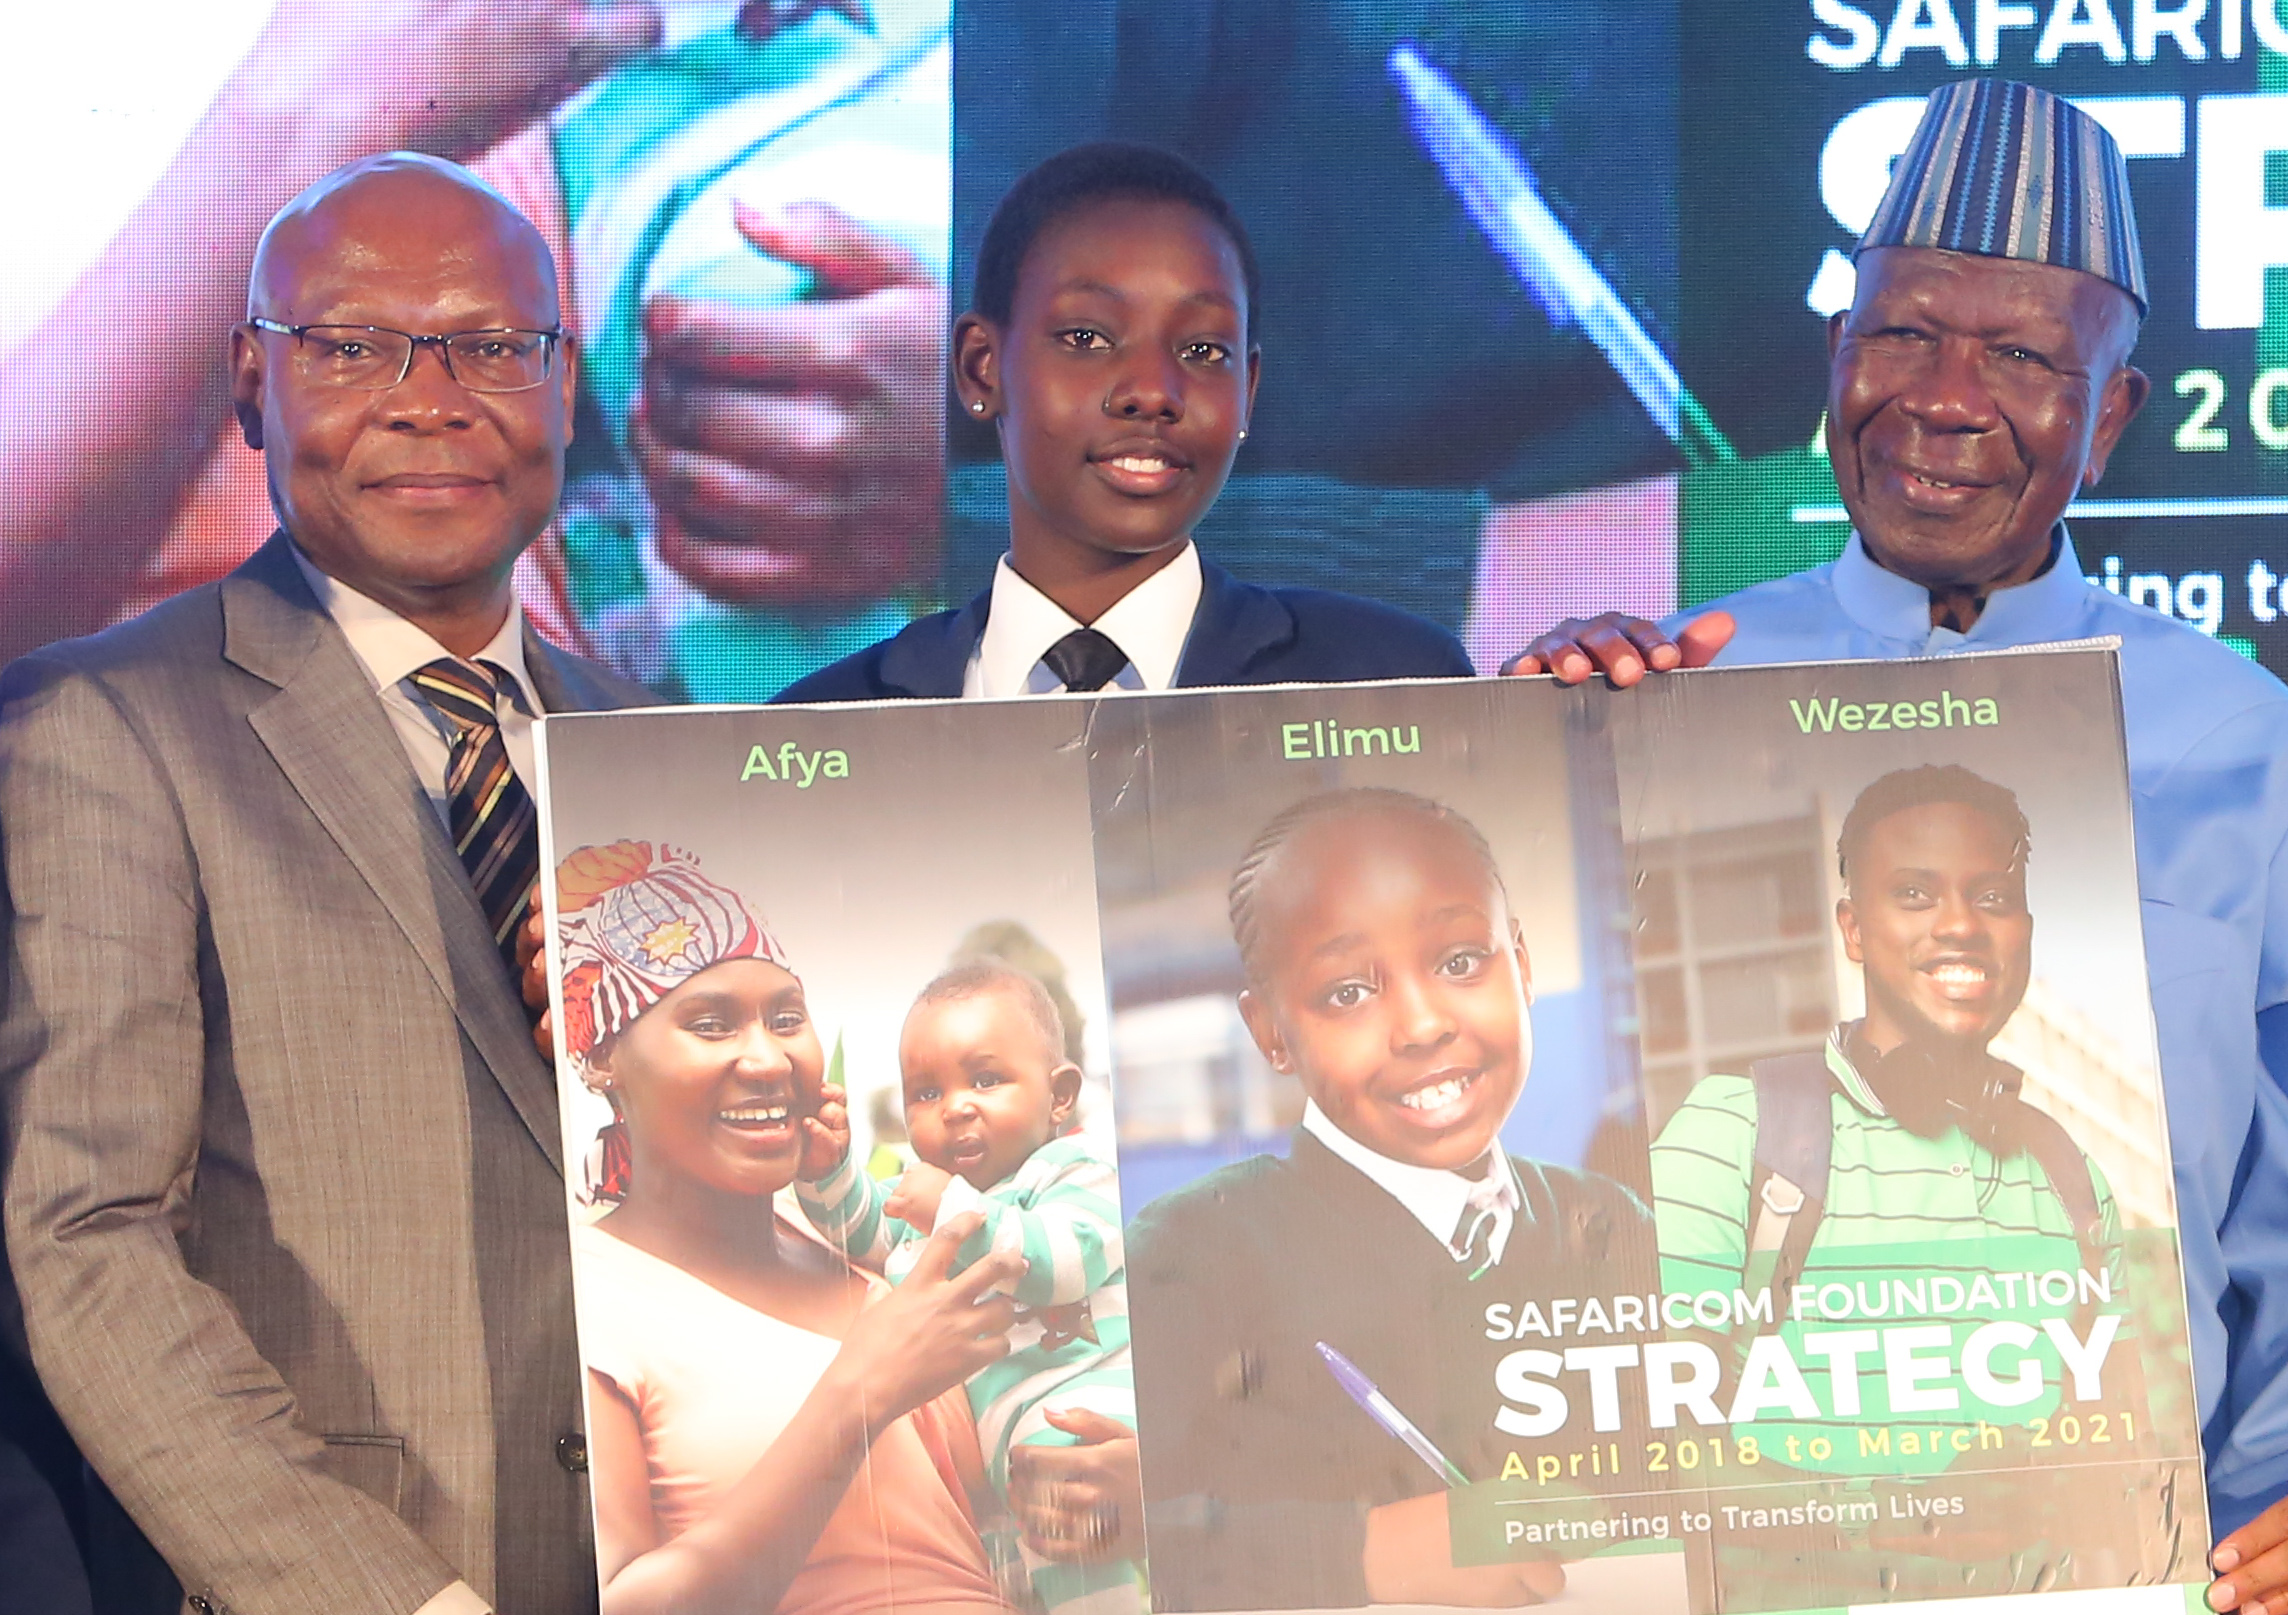 Safaricom Foundation Chairman, Joseph Ogutu is joined by Electine Akiru of the M-Pesa Foundation Academy and Safaricom Foundation Goodwill Ambassador, Hon. Moody Awori to mark the unveil of the Safaricom Foundation 2018-2012 Strategy - Bizna